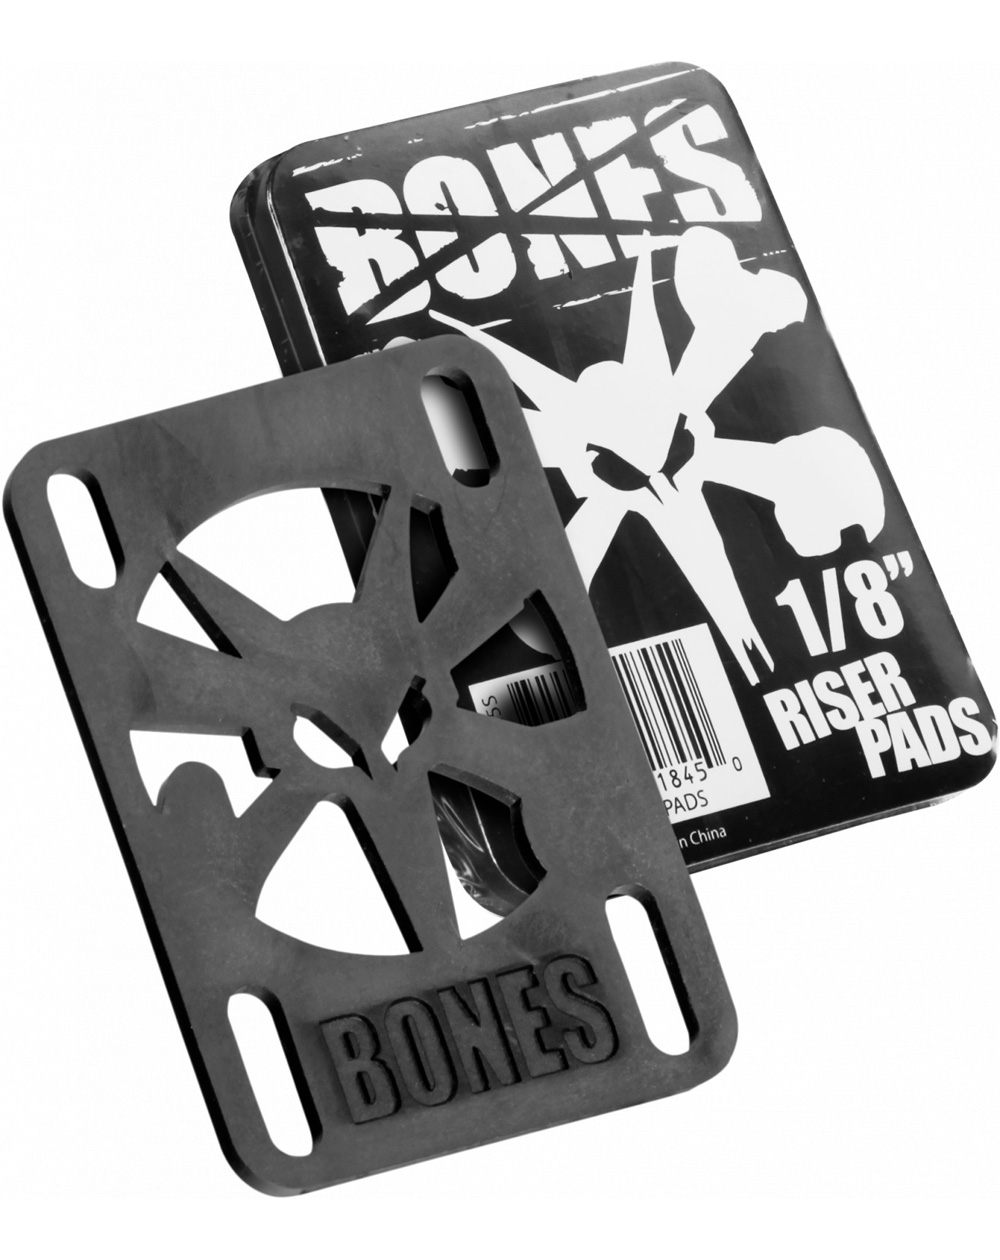 Bones Wheels 1/8-inch Skateboard Baseplates Black 2 er Pack